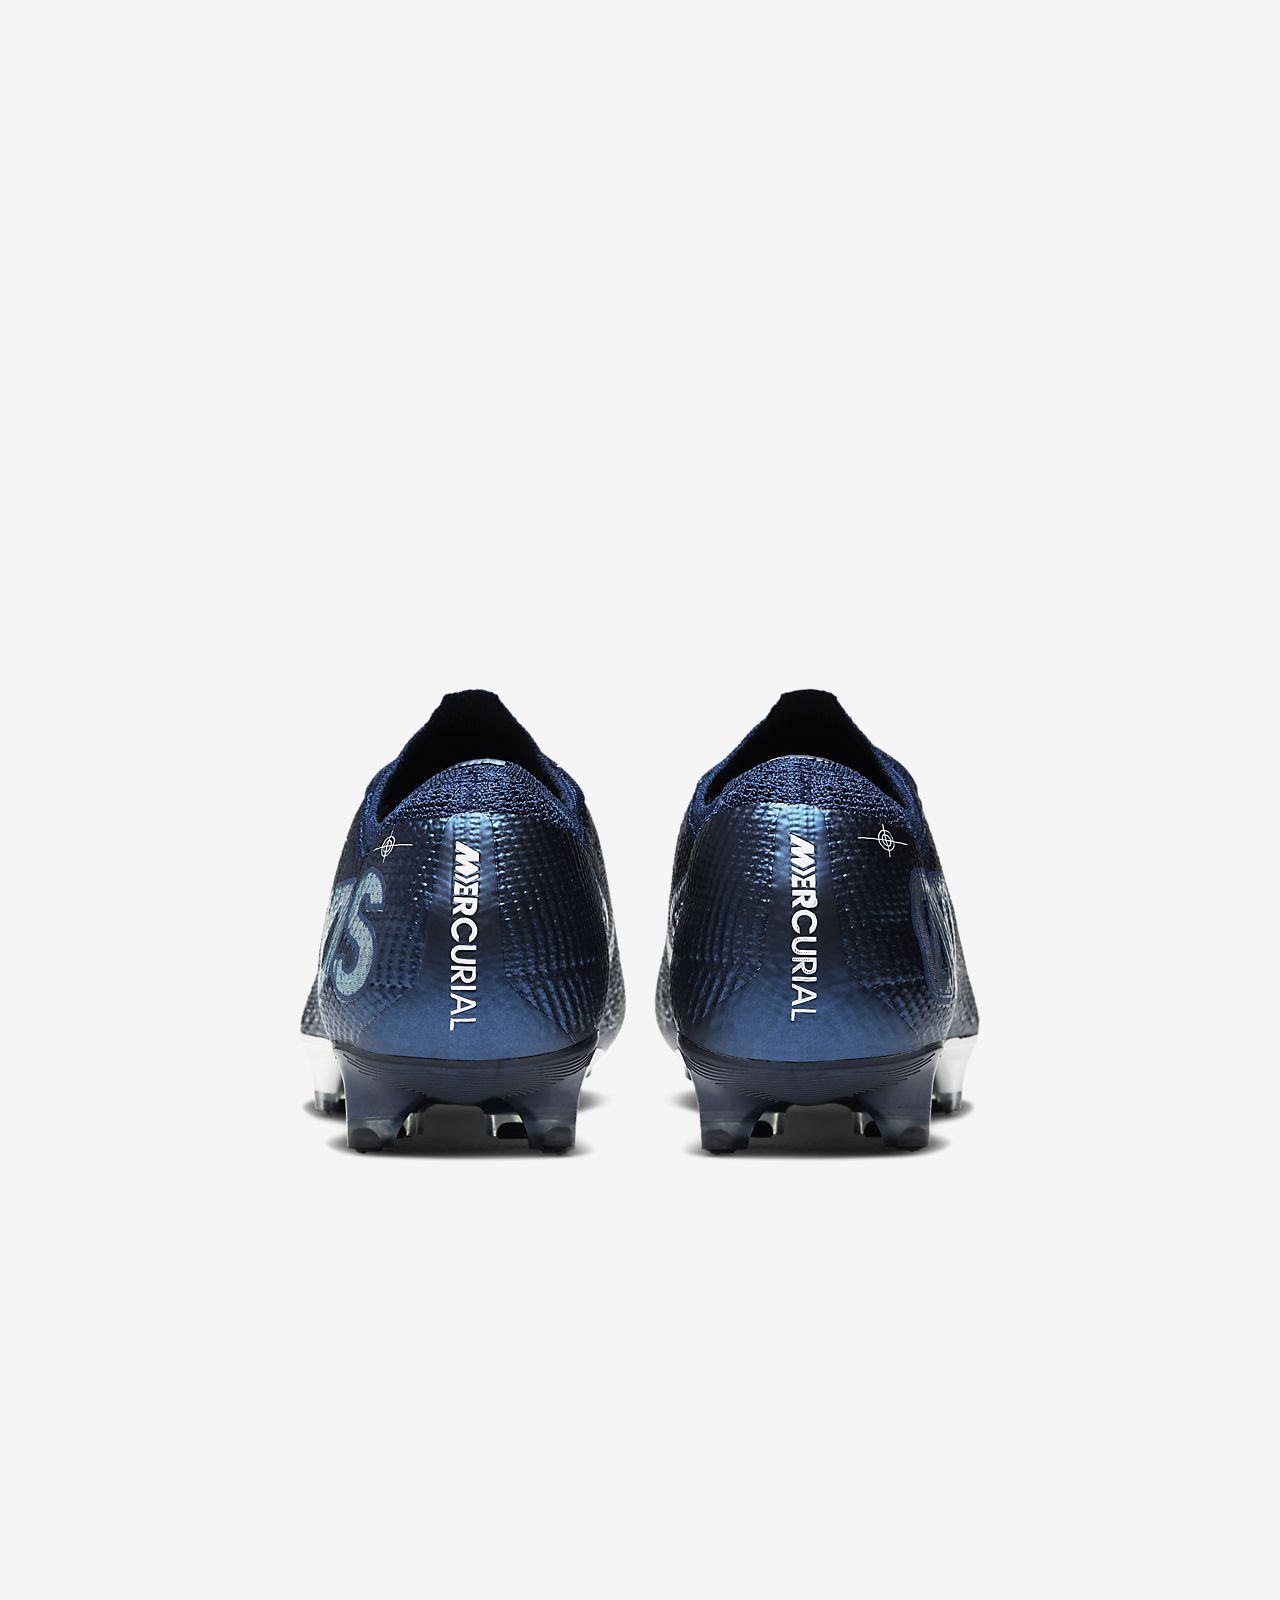 Nike Chaussures Mercurial Fg Vapor Noir Football Argenté Ix